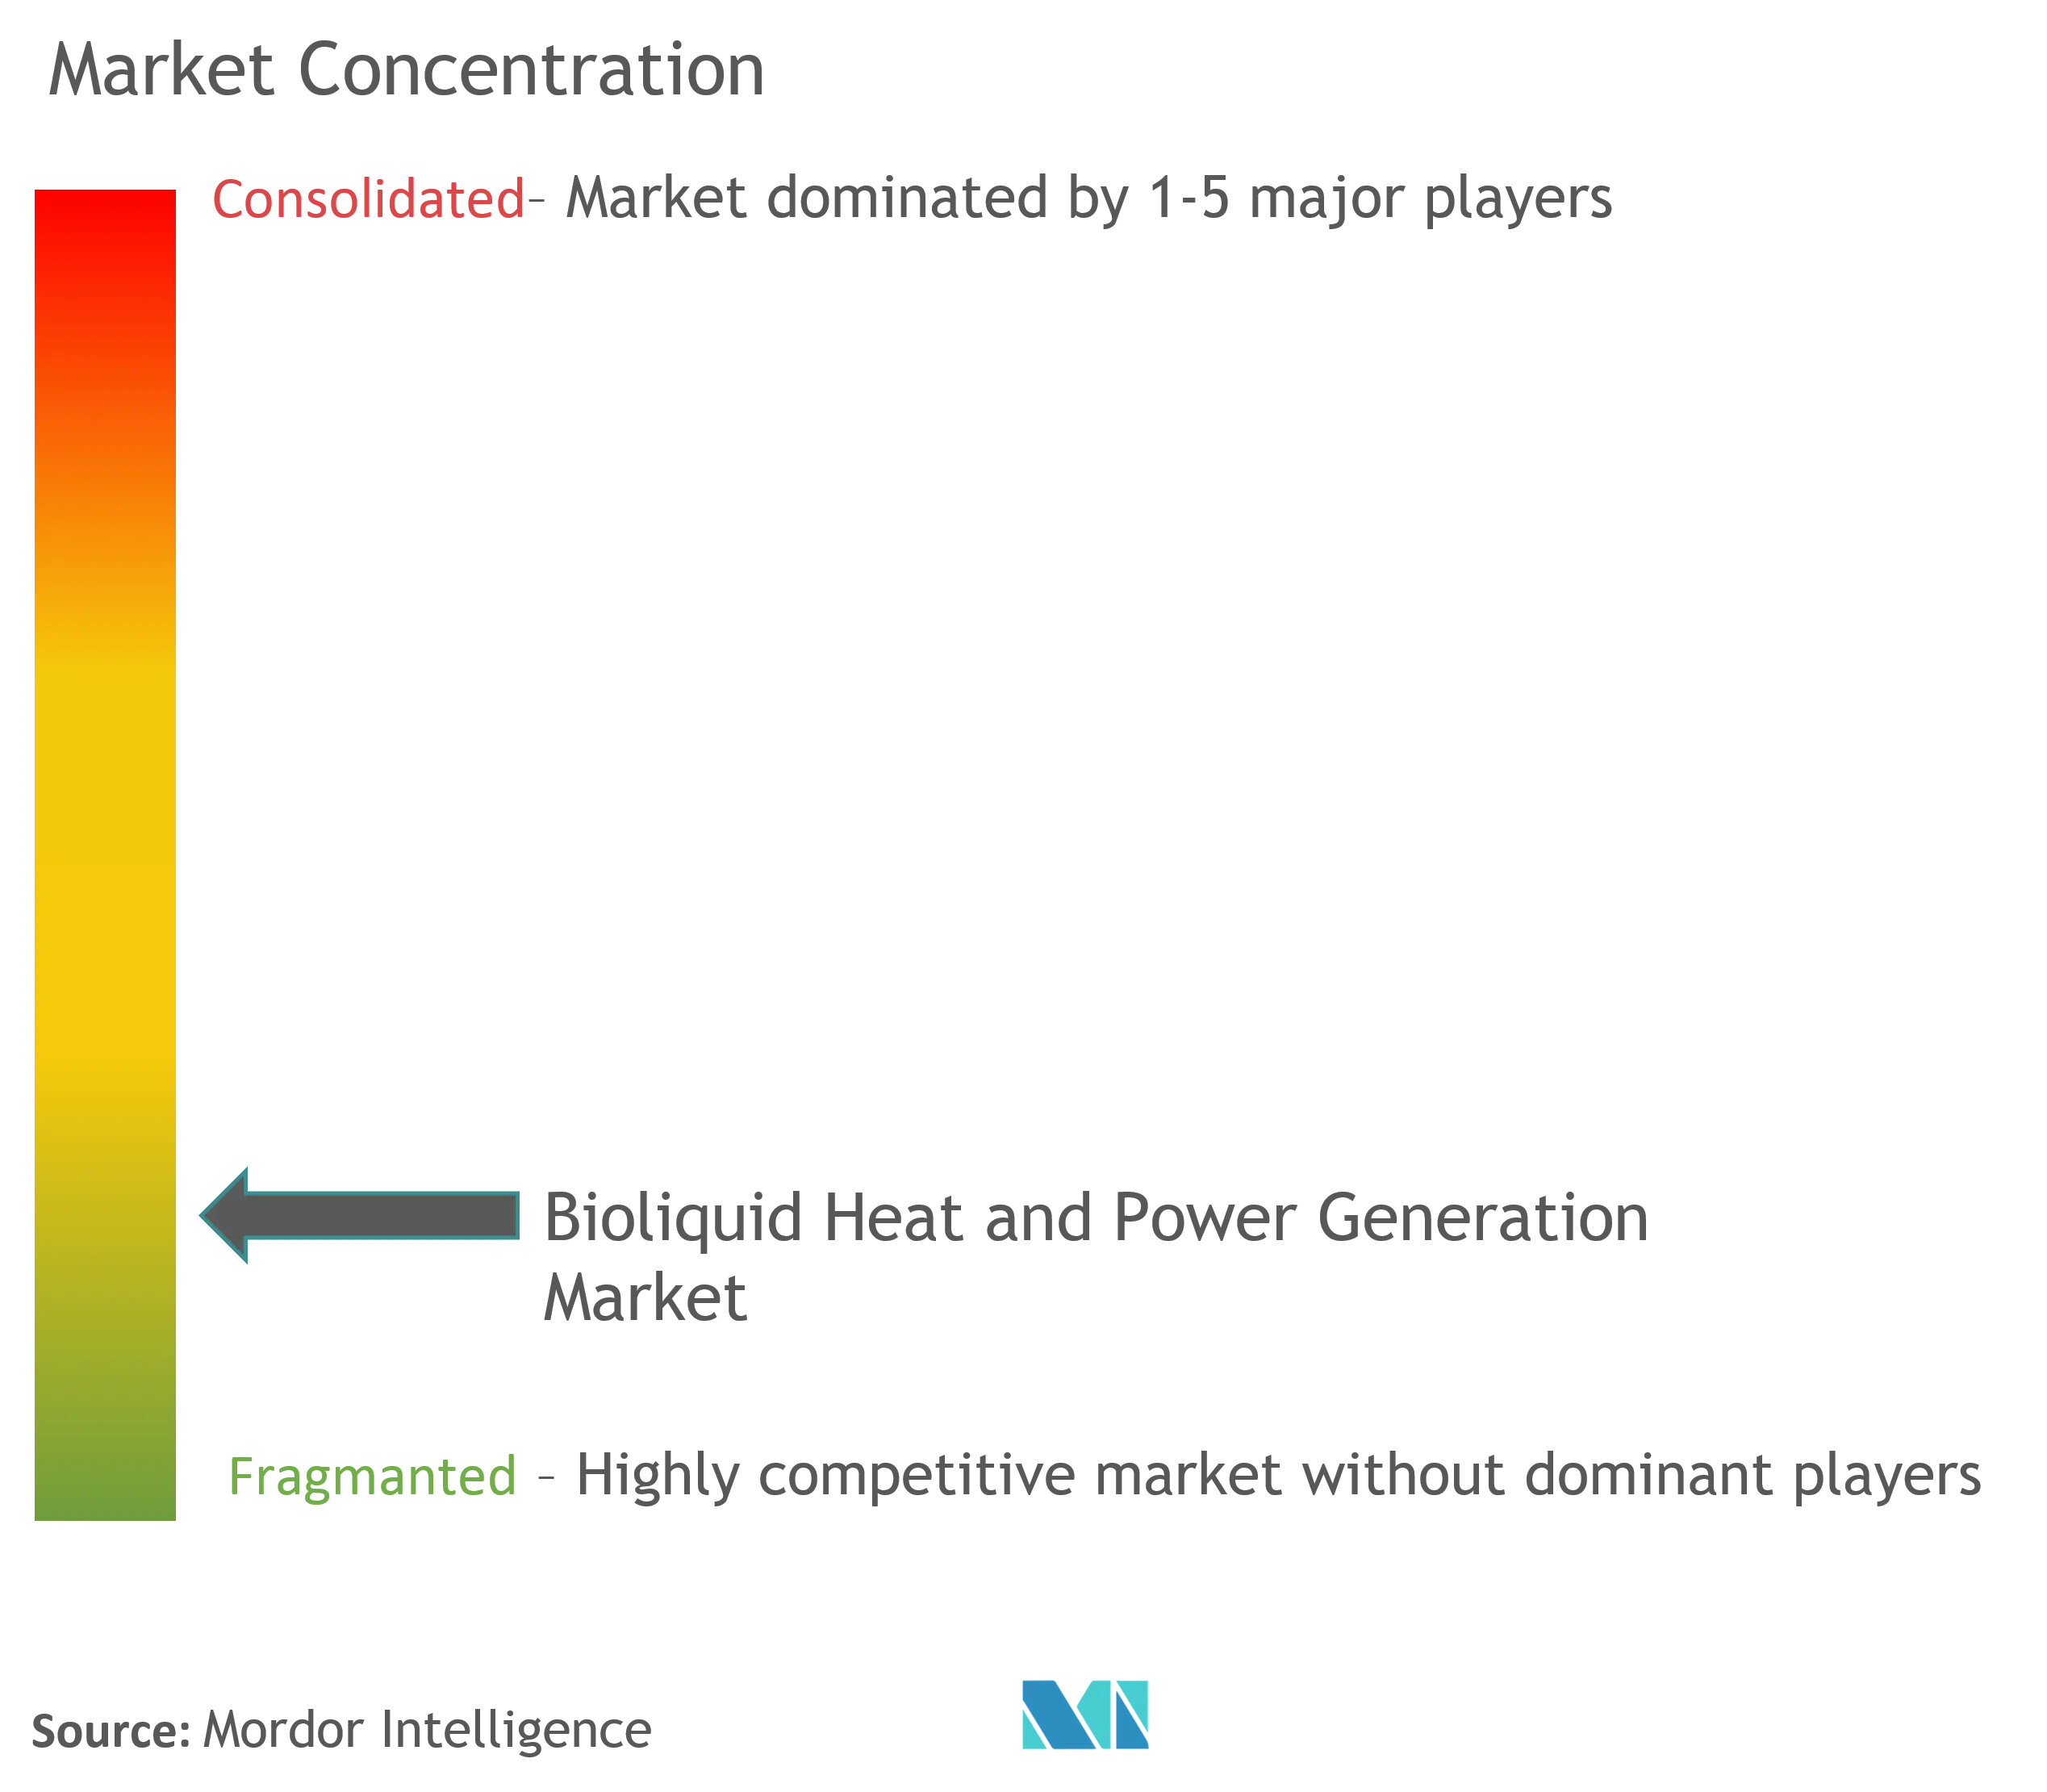 Bioliquid Heat and Power Generation Market Concentration